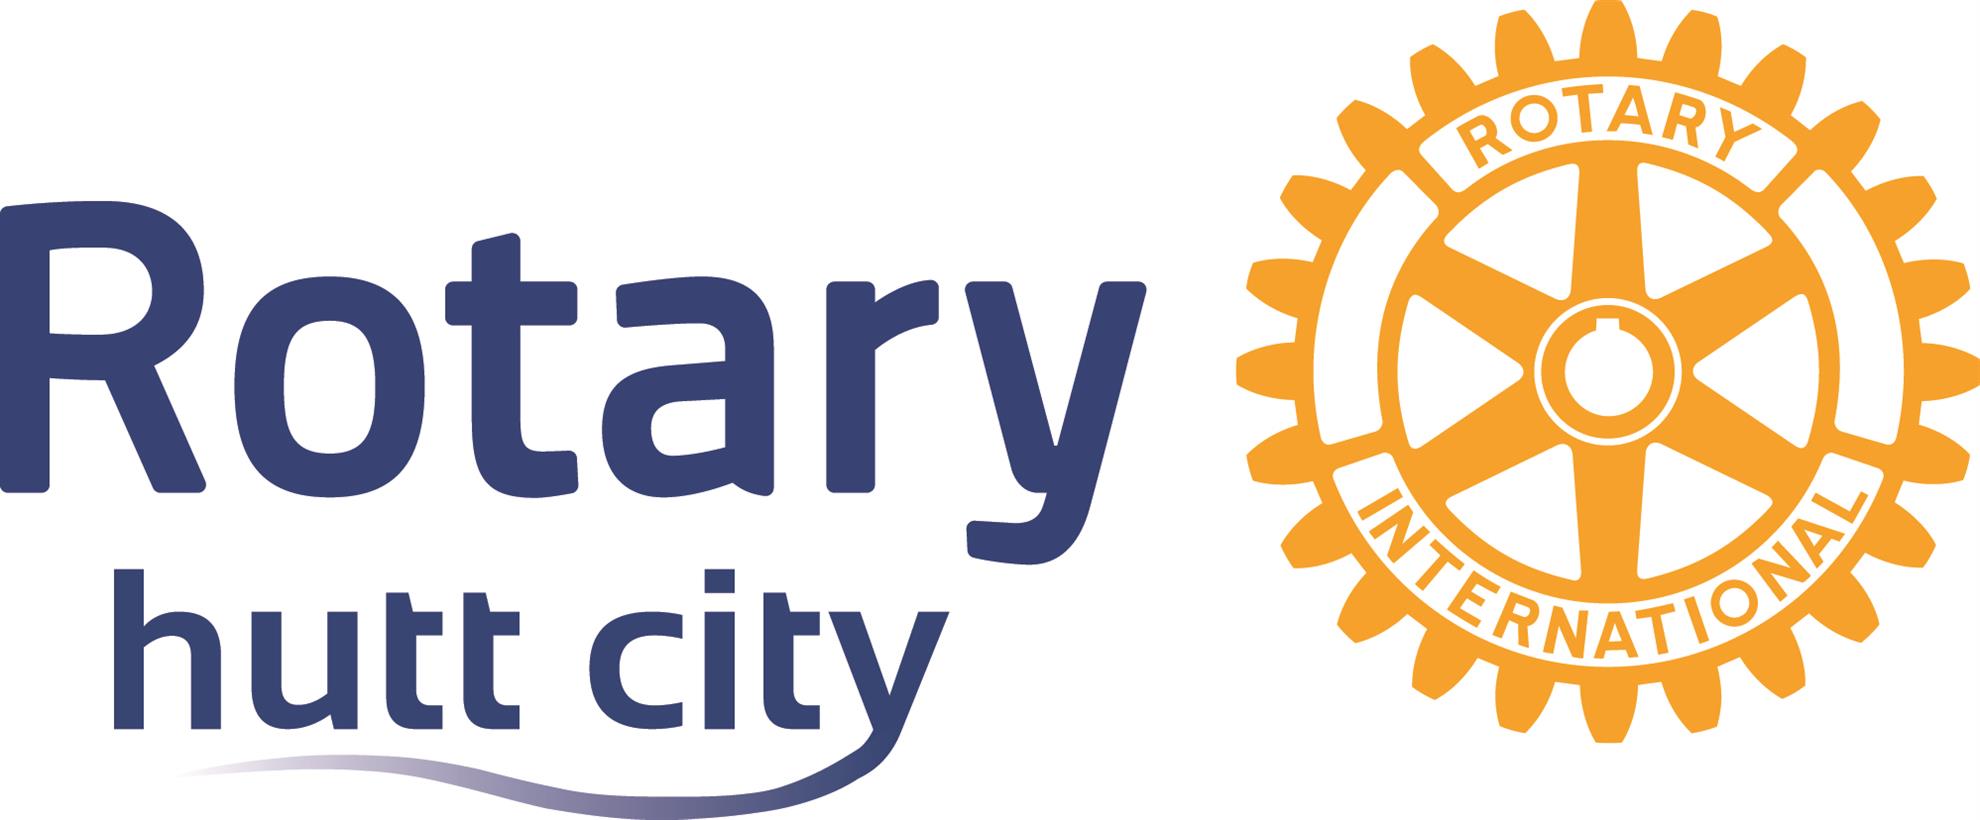 club logo | The Rotary Club of Hutt City